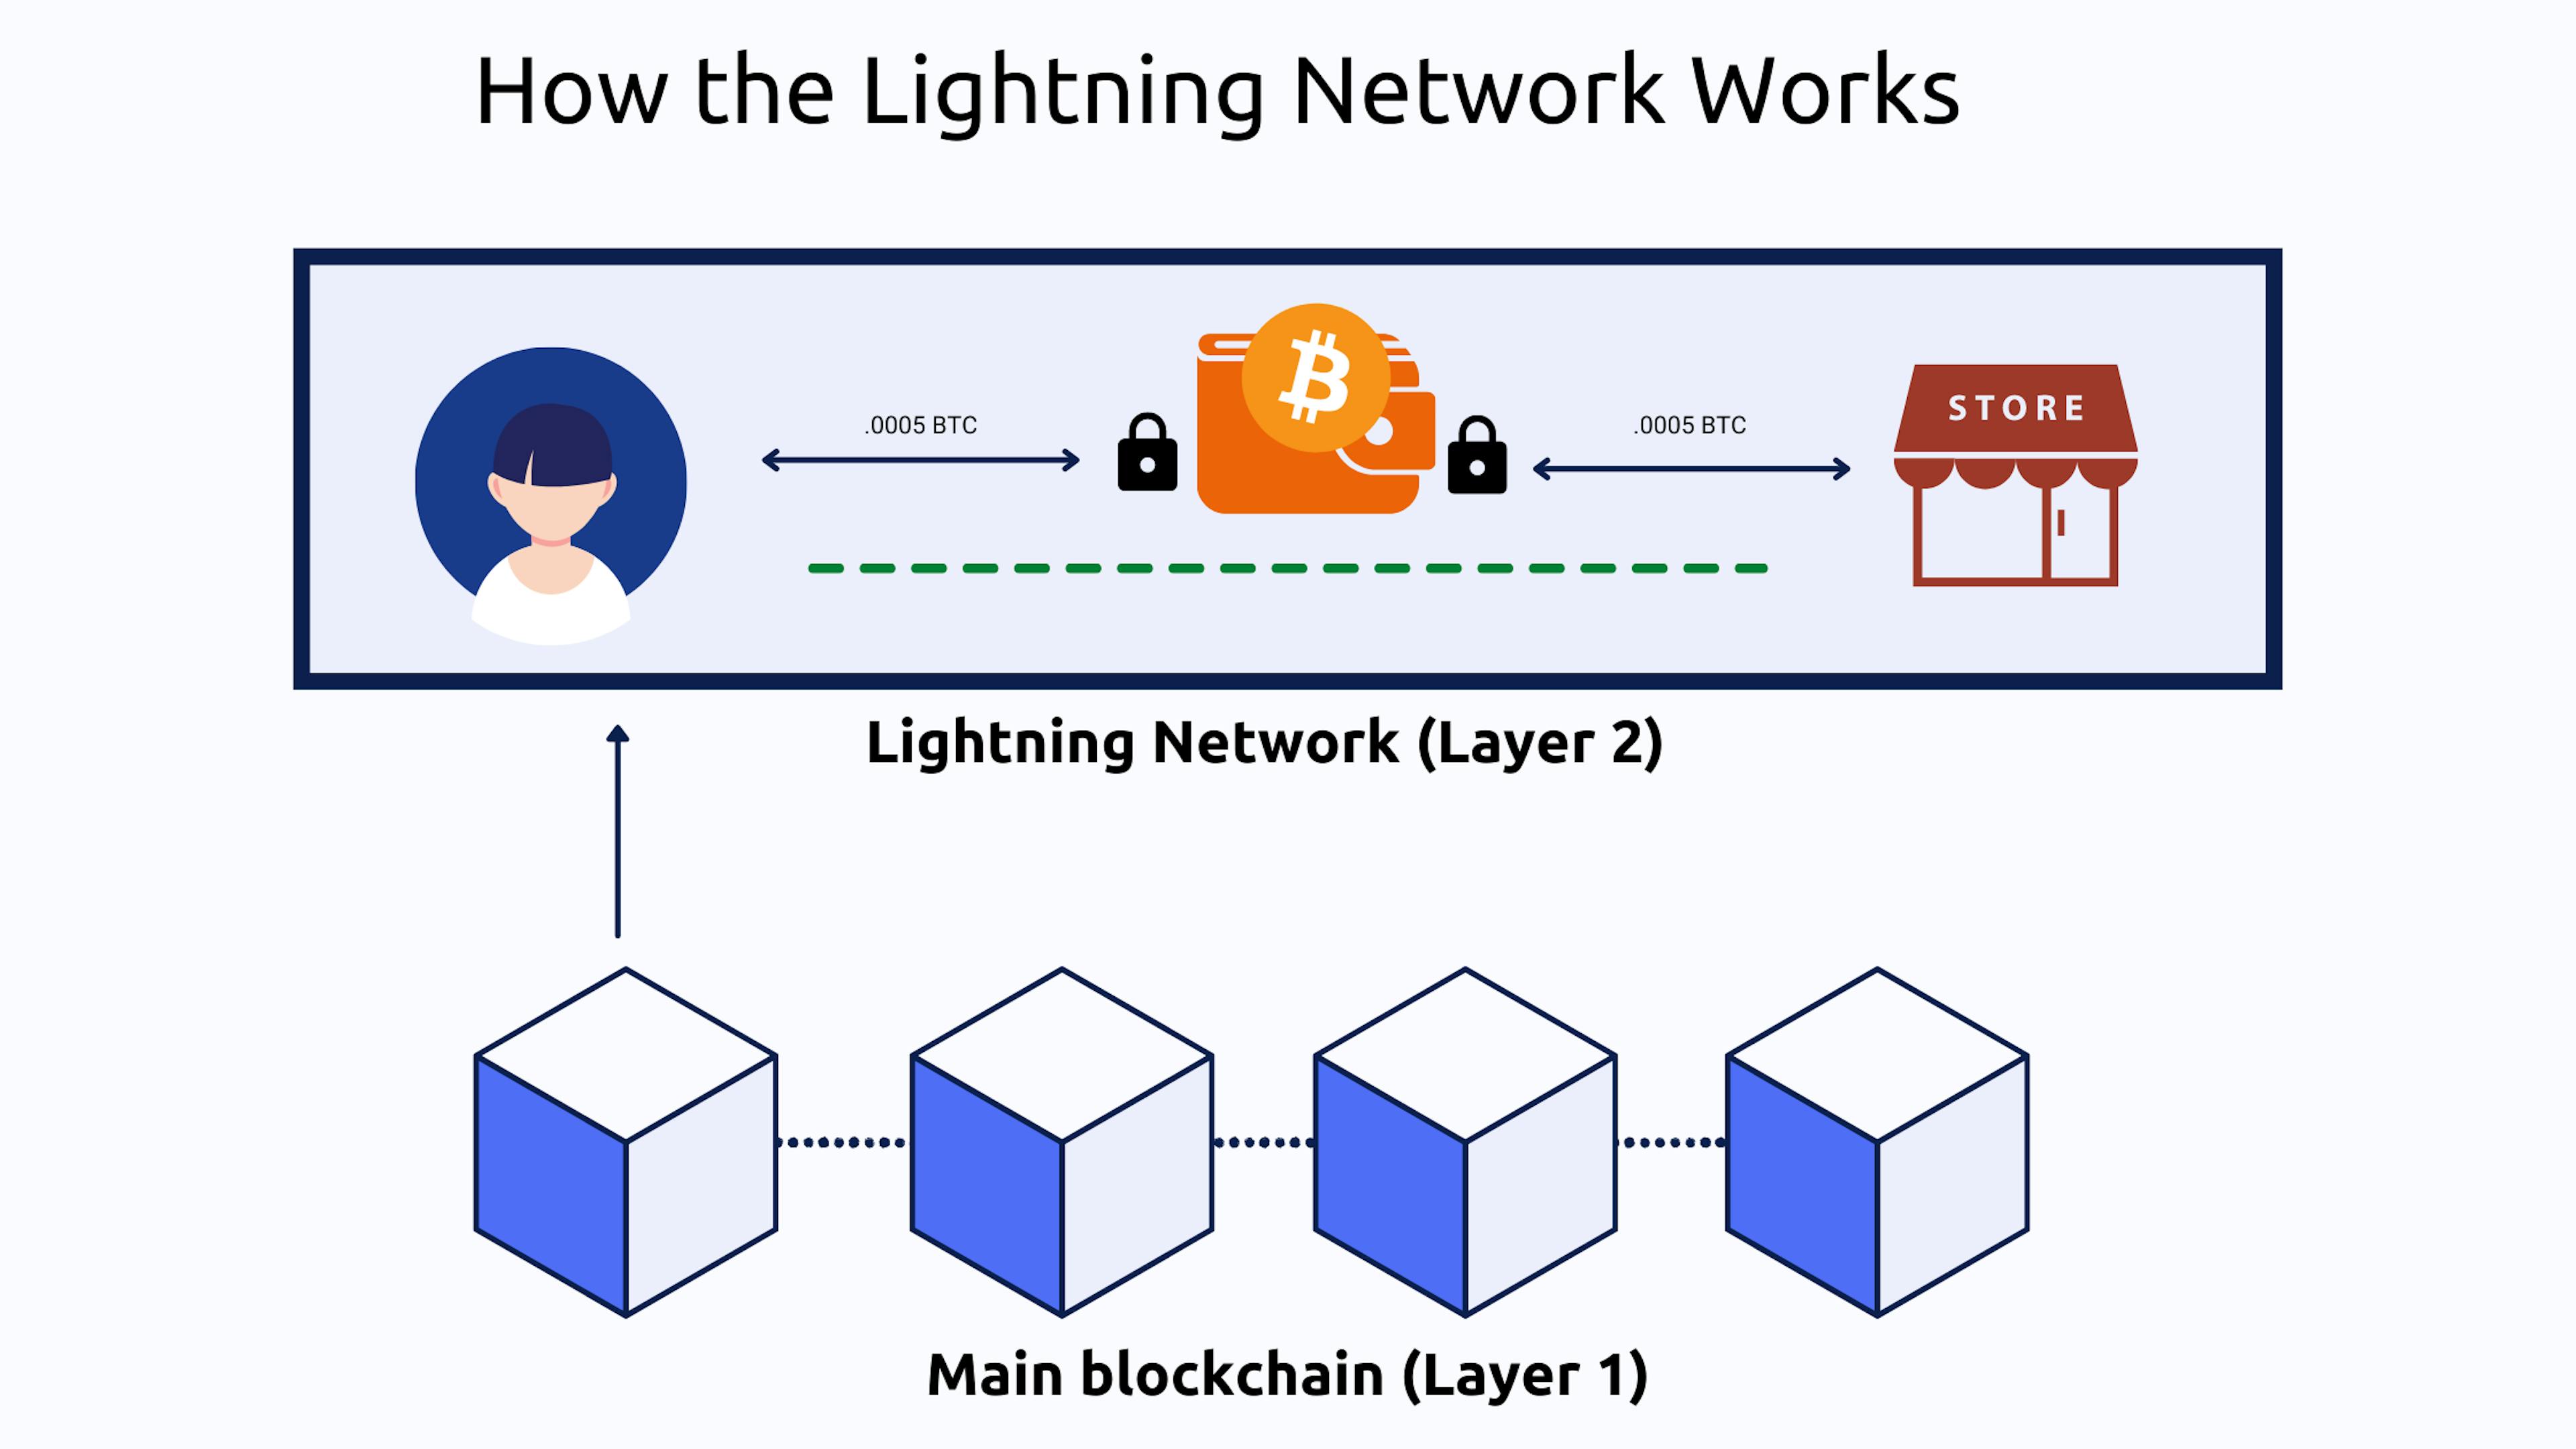 Fuente de la imagen: https://bitpay.com/blog/what-is-the-lightning-network/